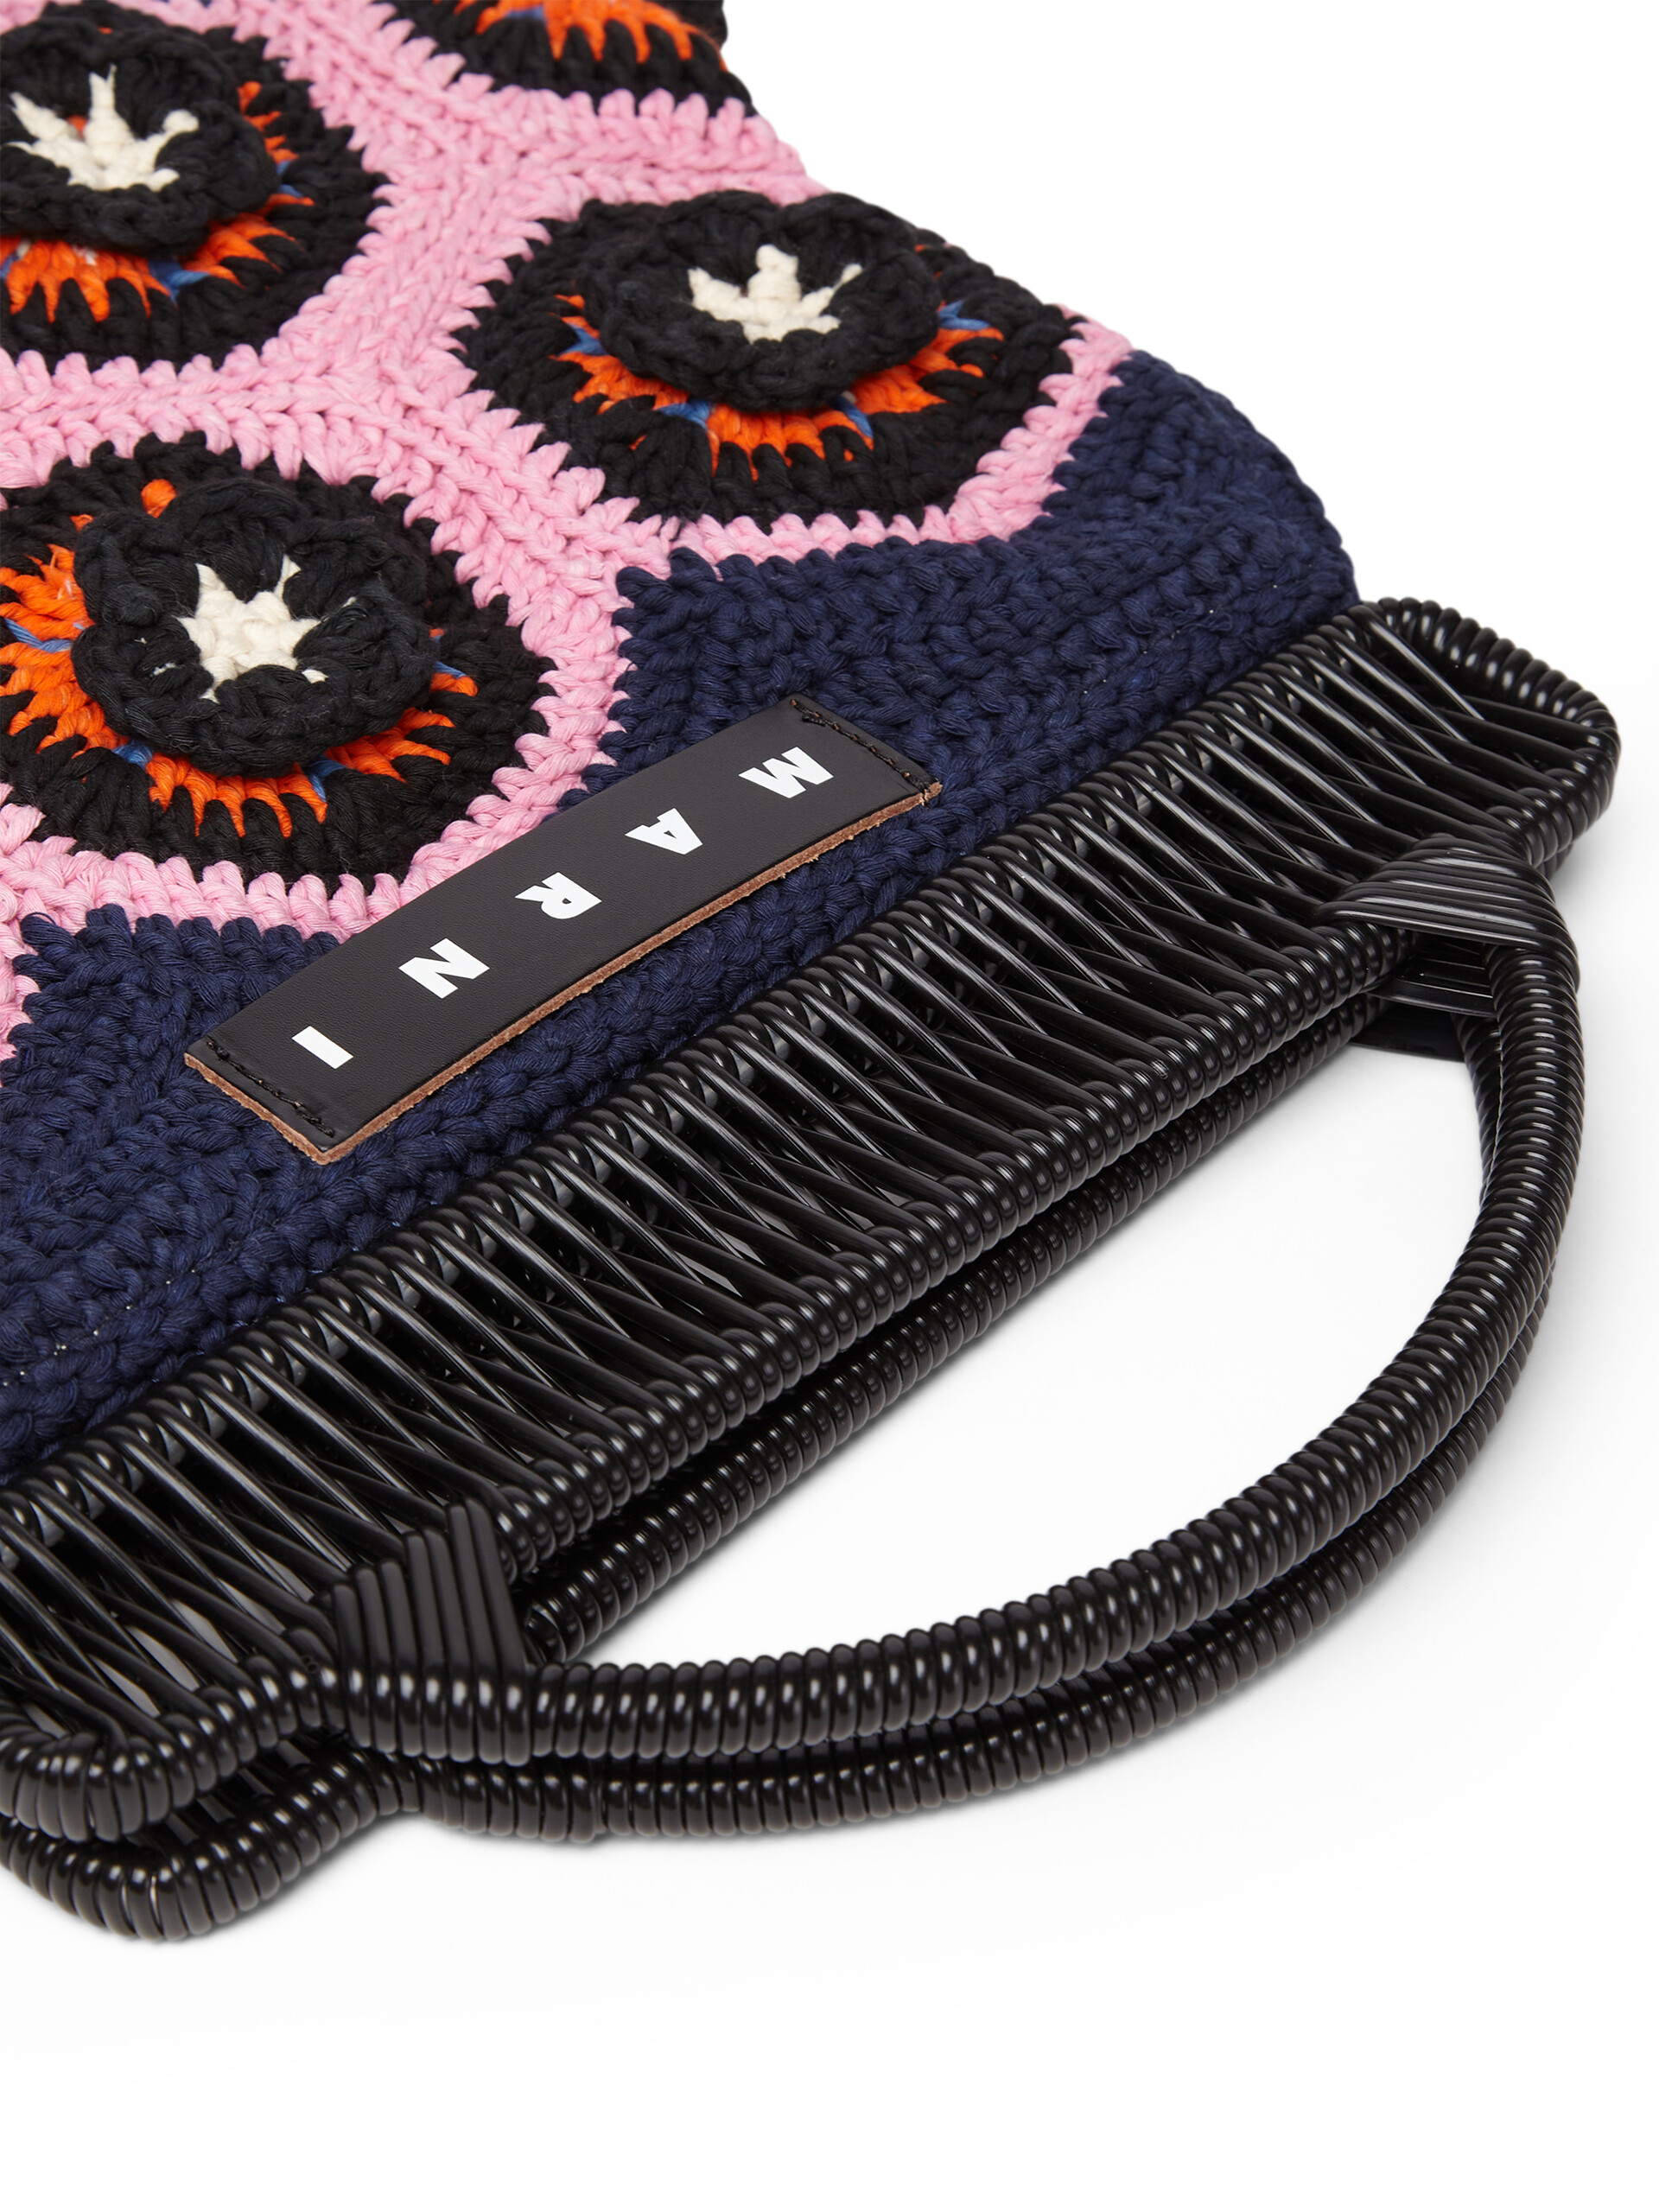 MARNI MARKET frame bag with floral motif in pink and blue crochet cotton blend - Furniture - Image 4